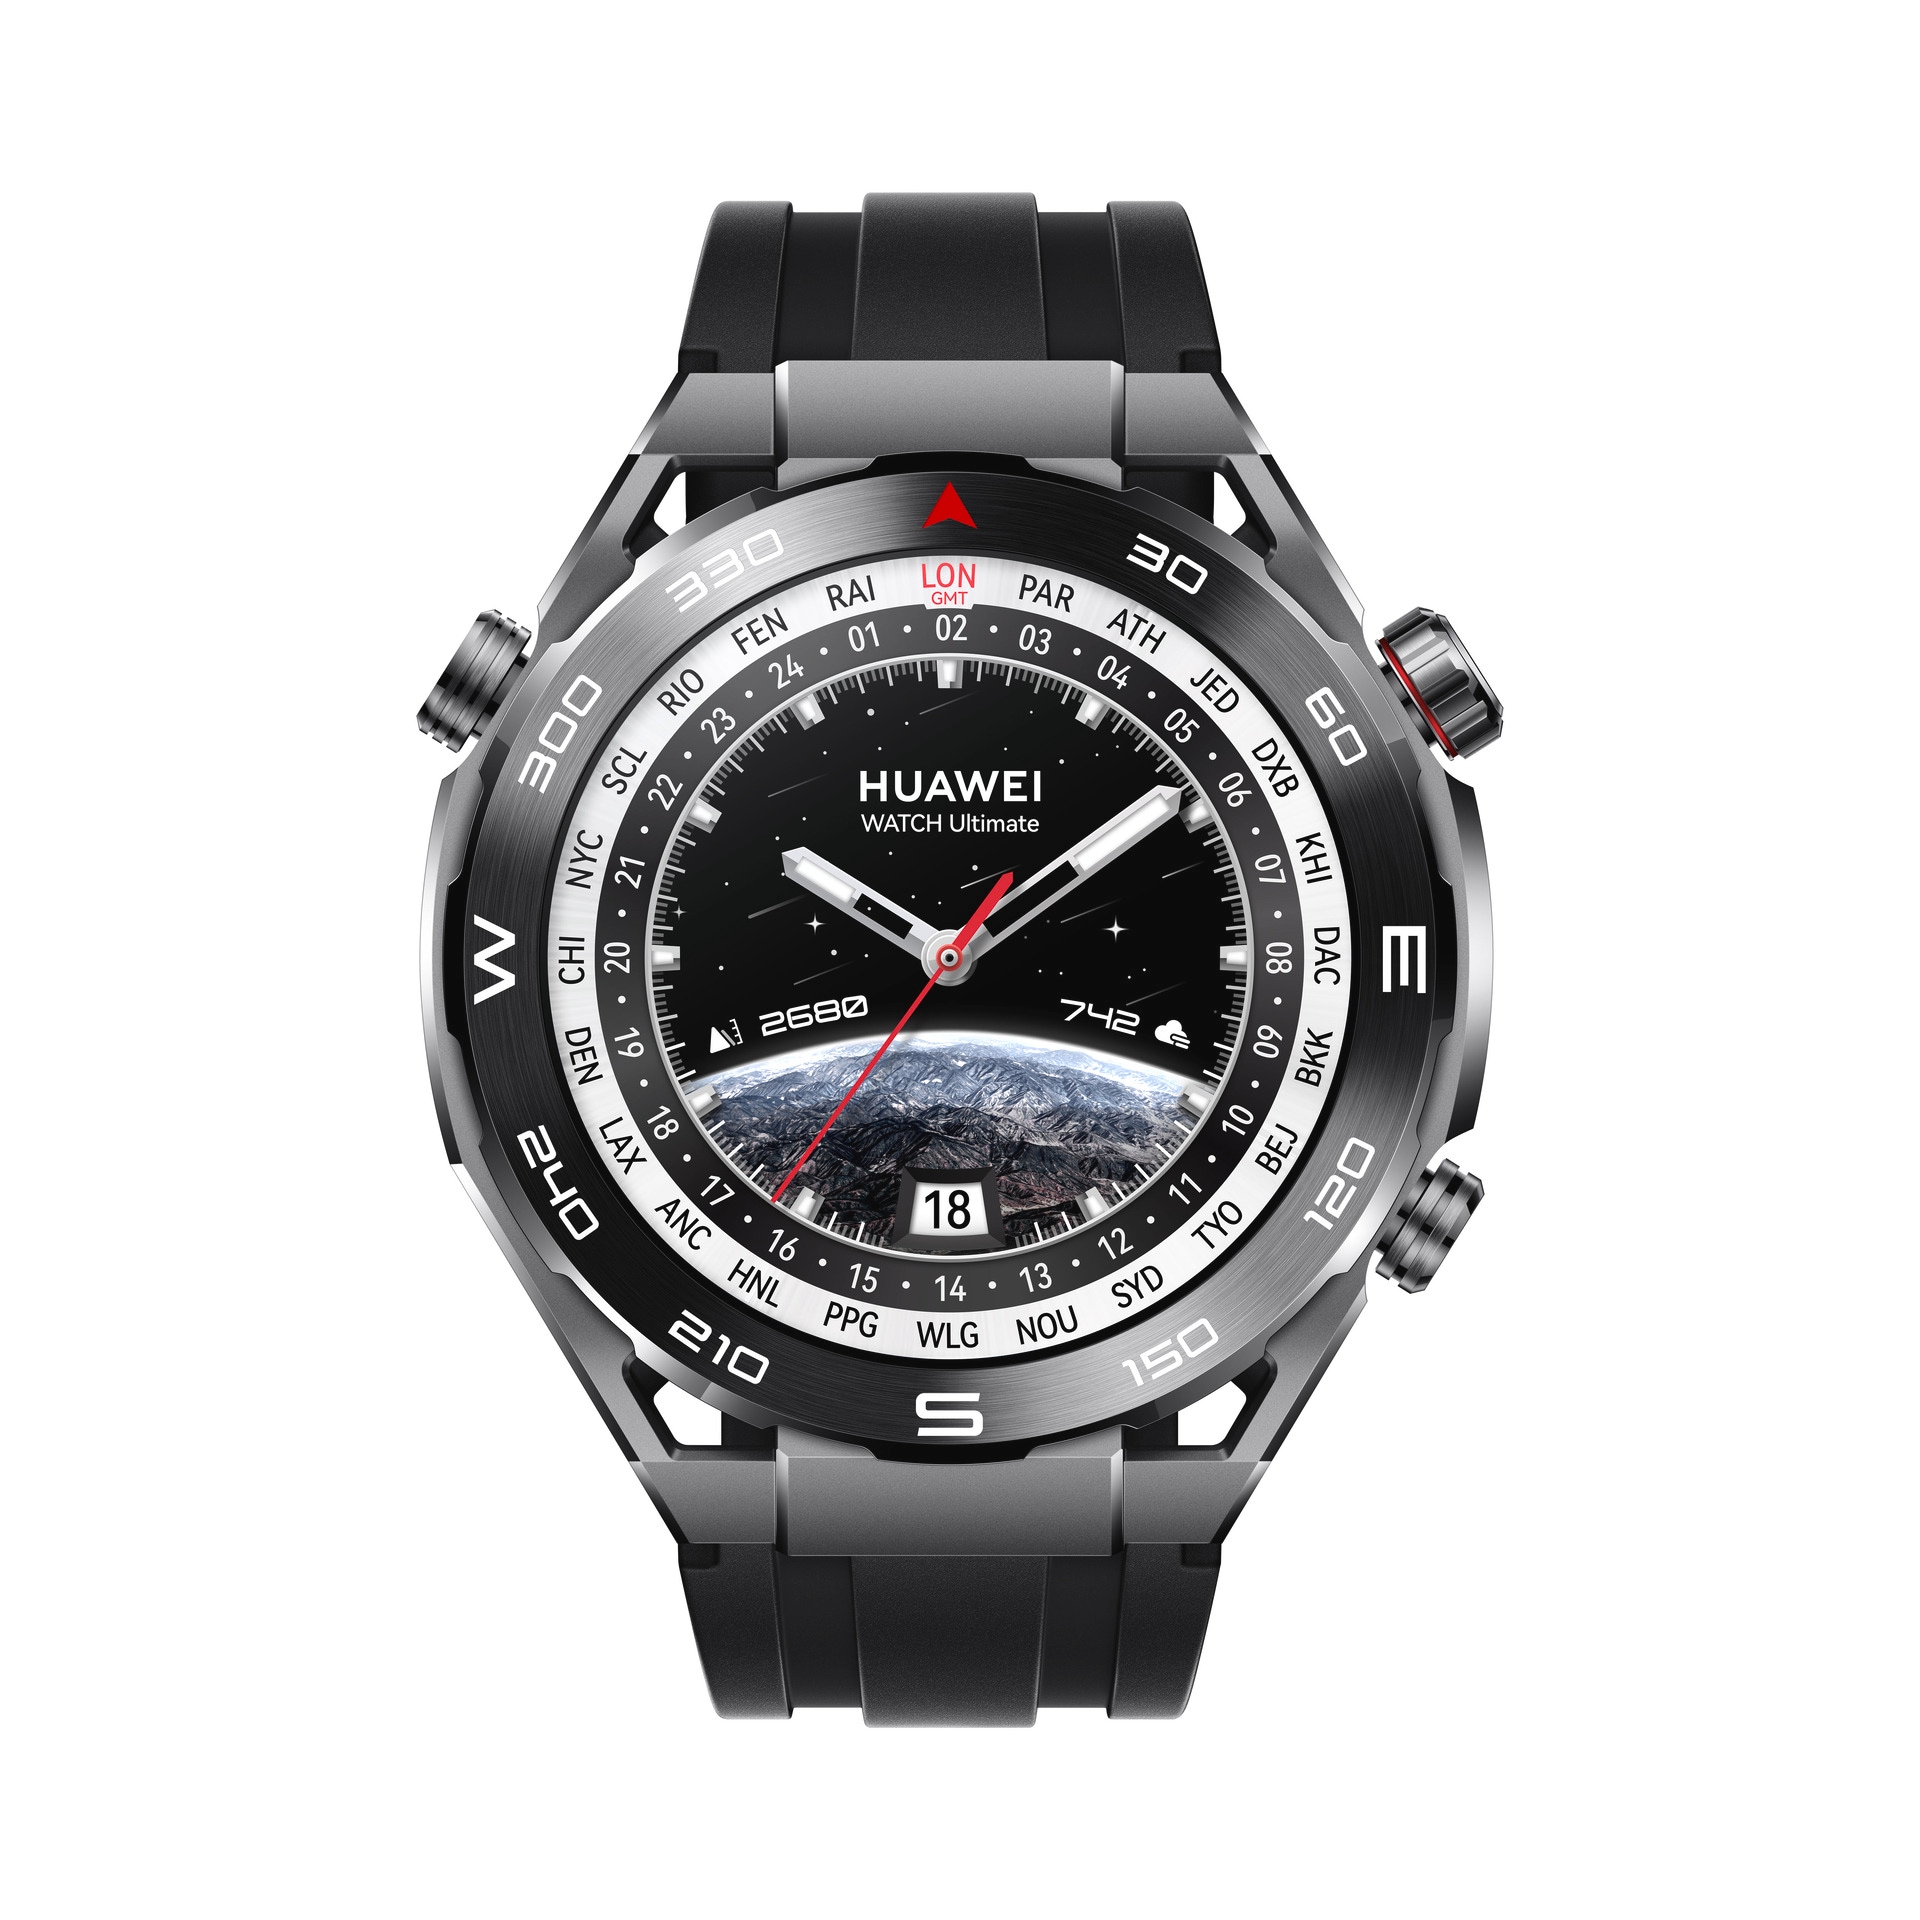 Huawei Smartwatch »Watch (Proprietär) UNIVERSAL | Ultimate«, kaufen